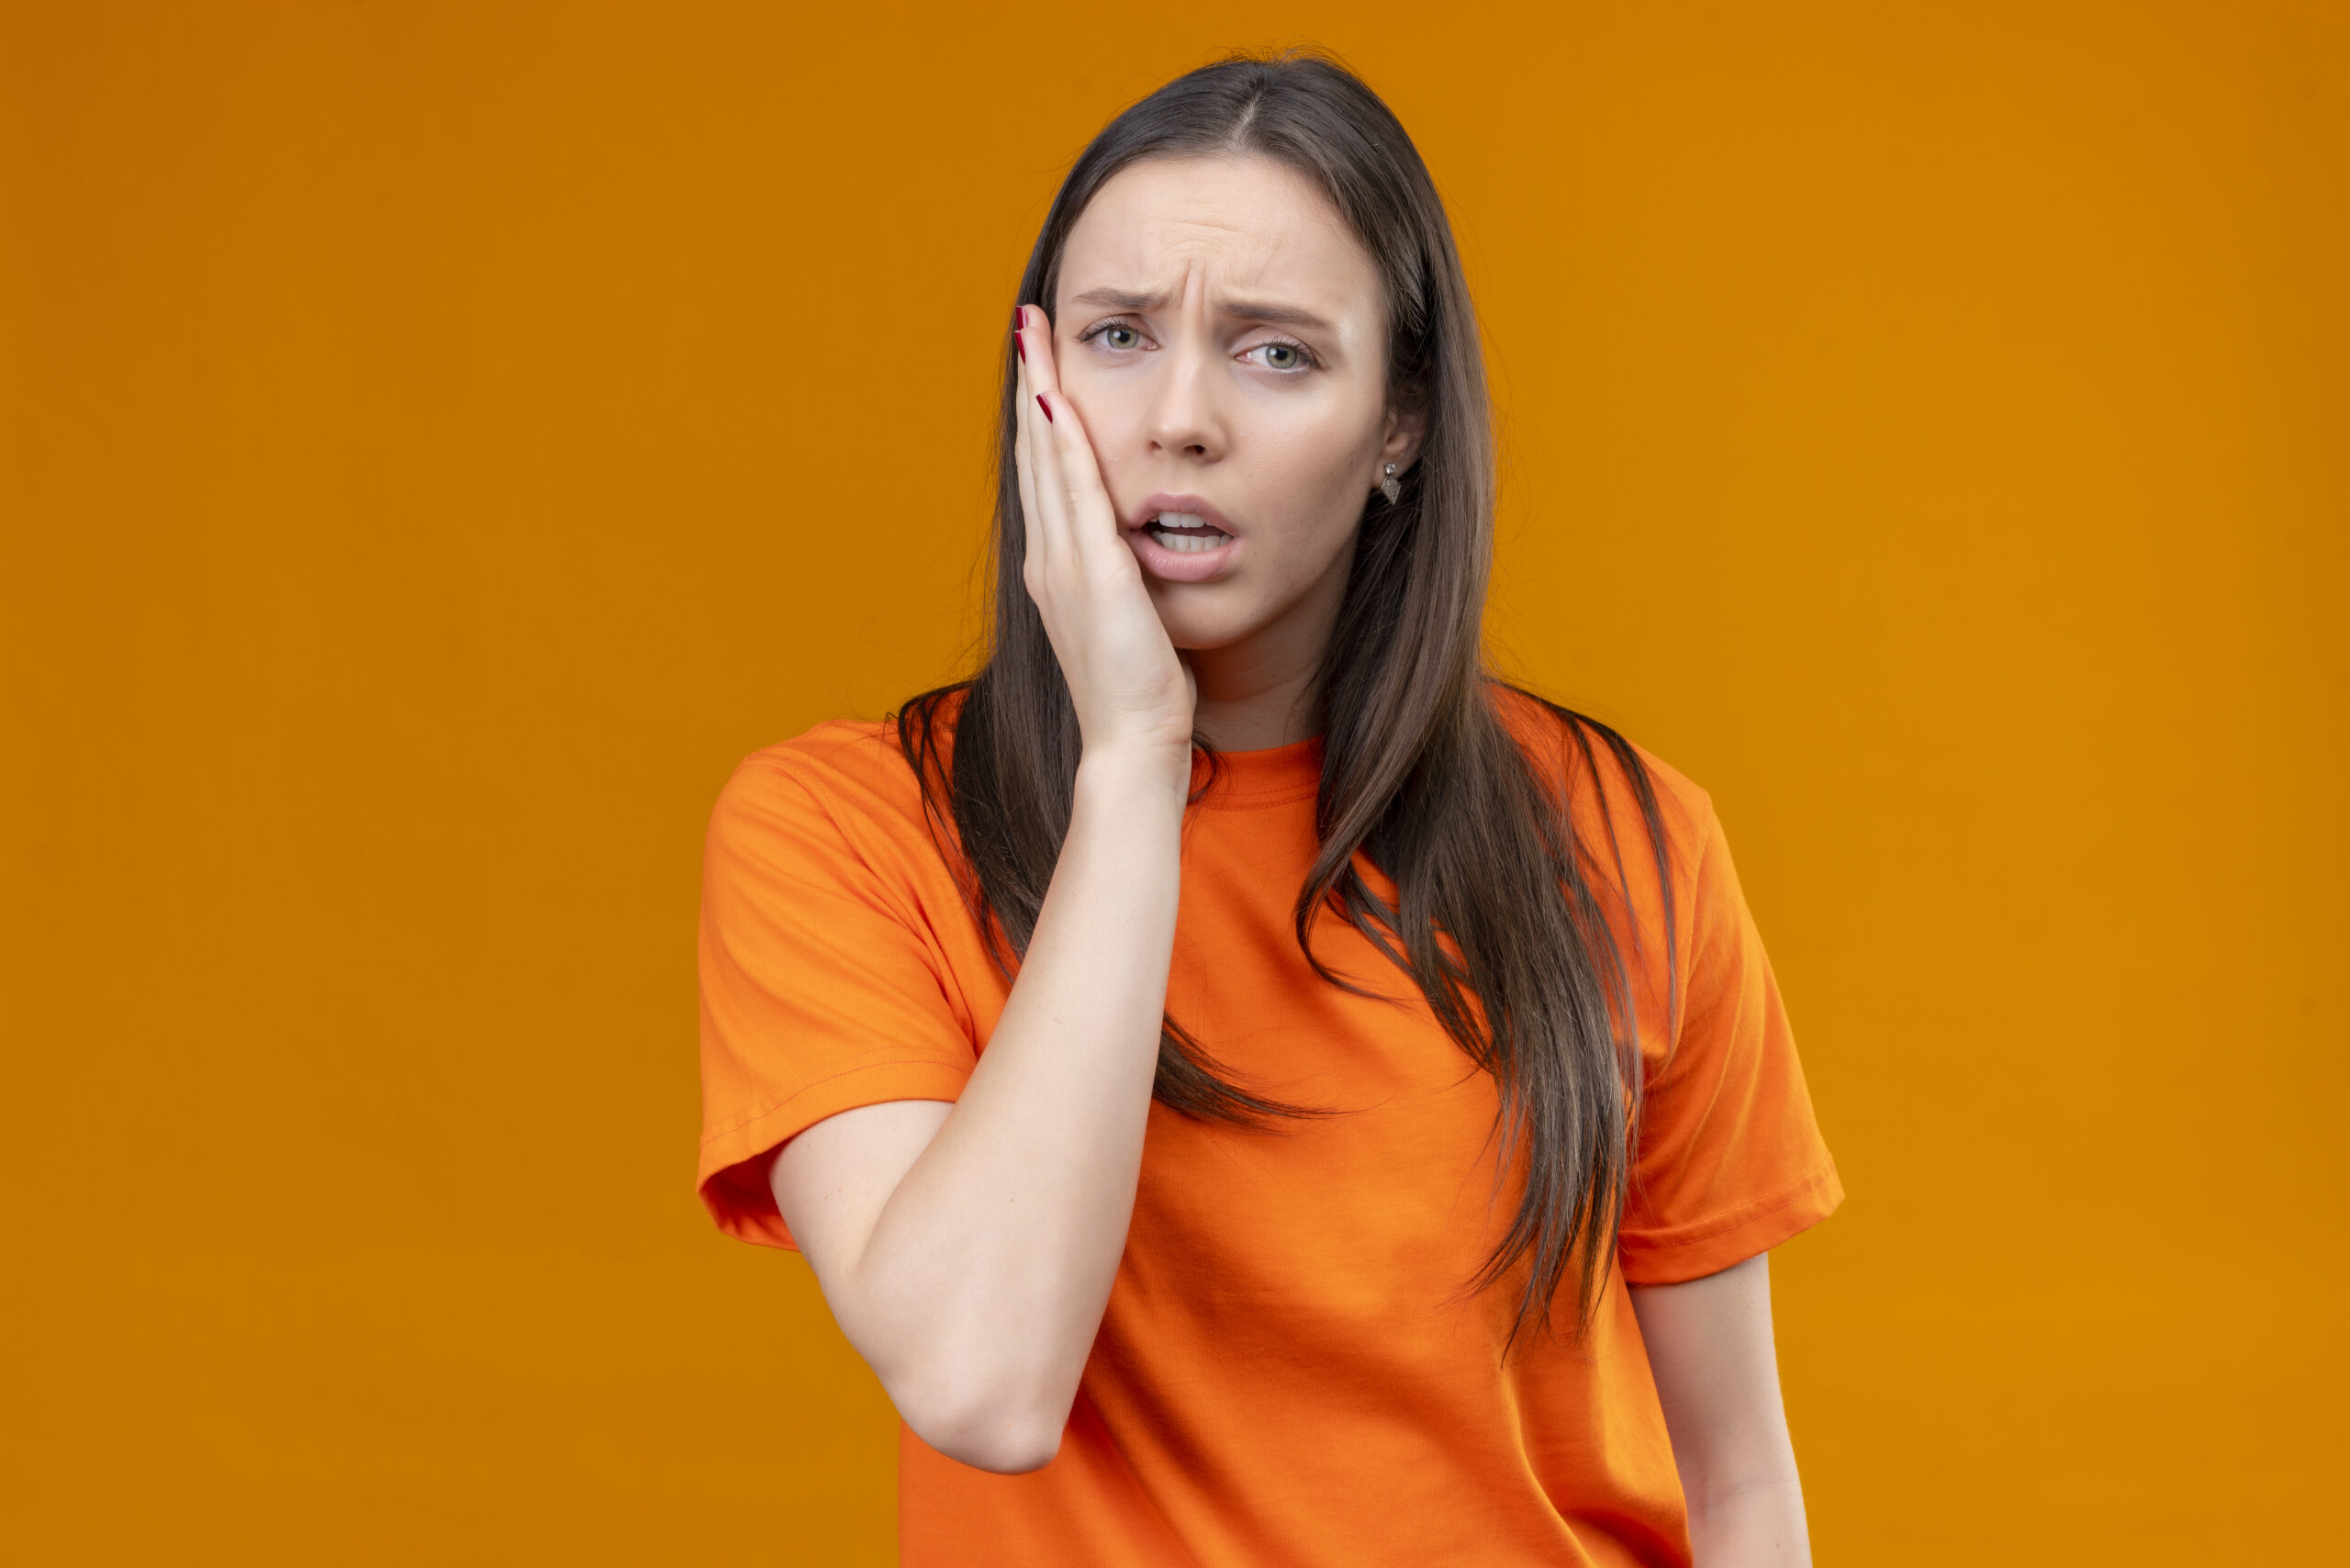 young beautiful girl wearing orange t-shirt looking unwell touching her cheek feeling toothache standing over isolated orange background